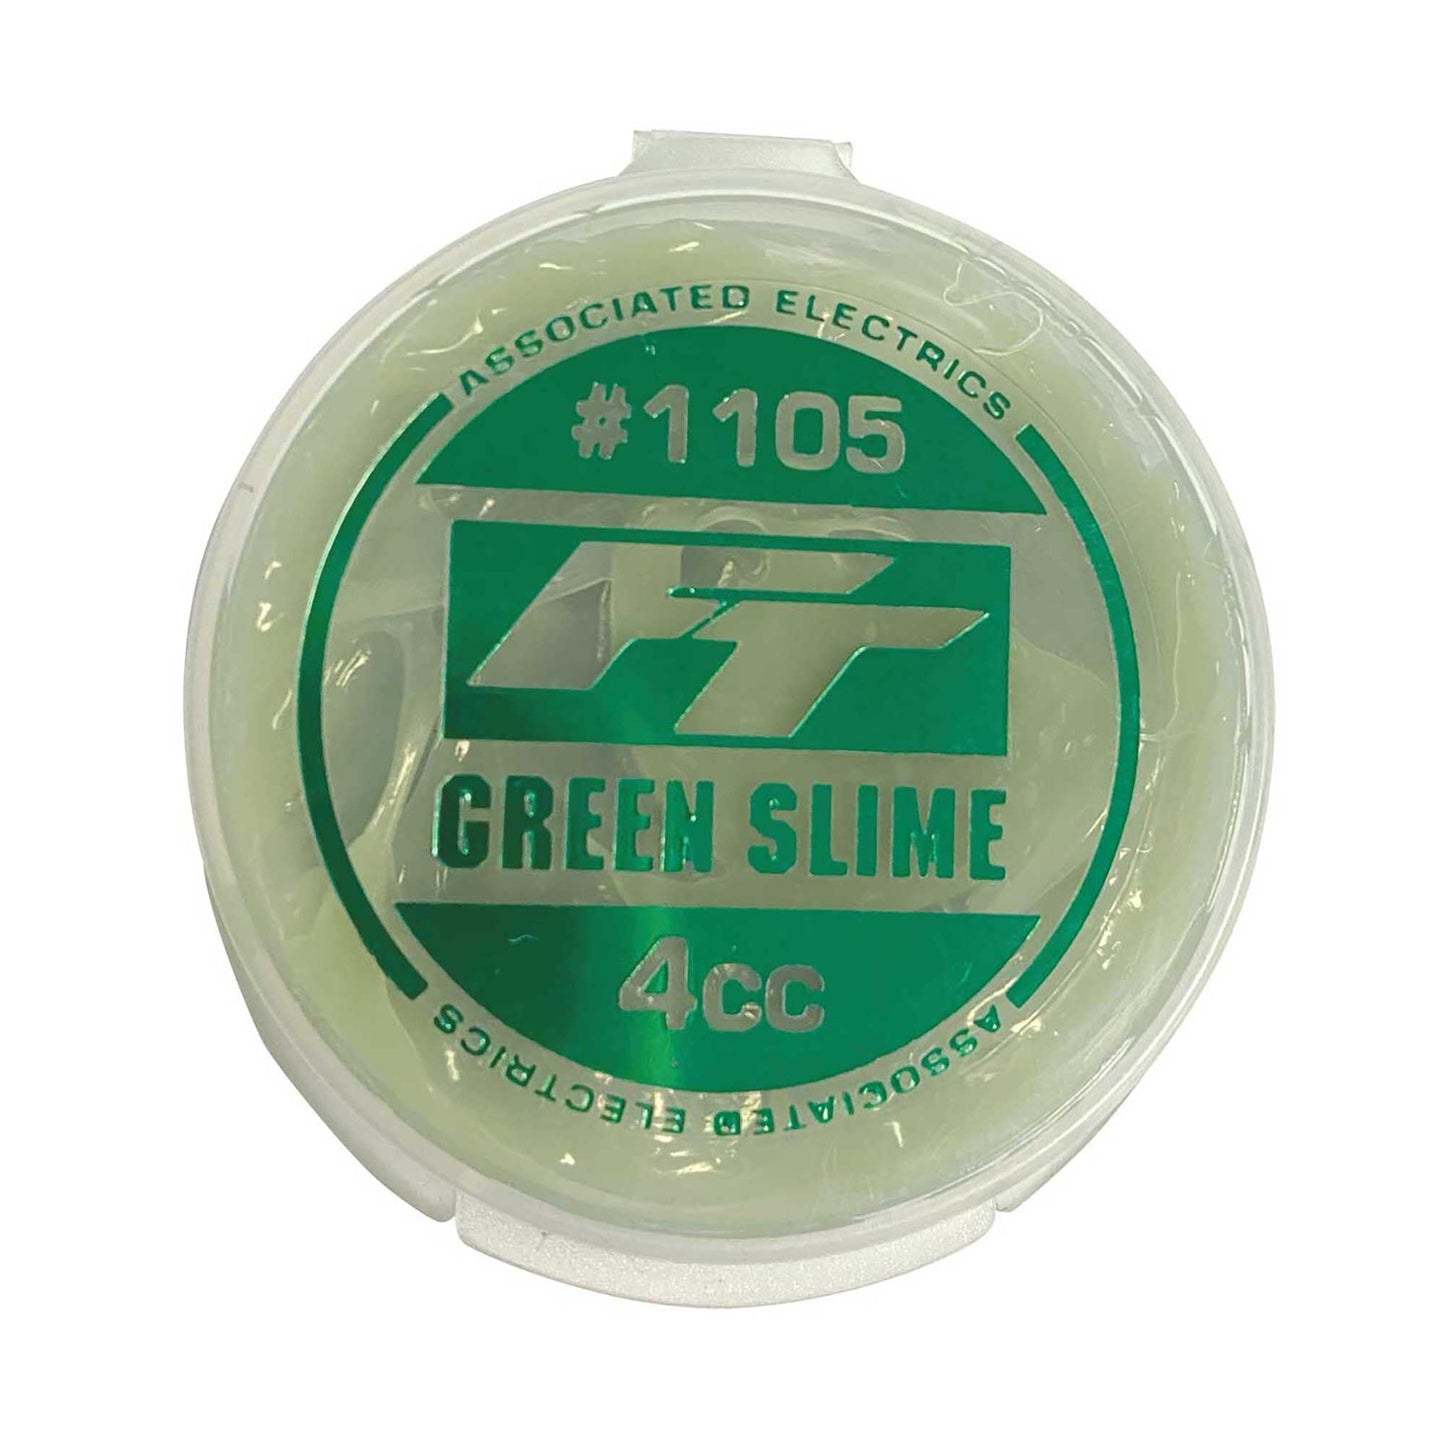 Green Slime shock lube